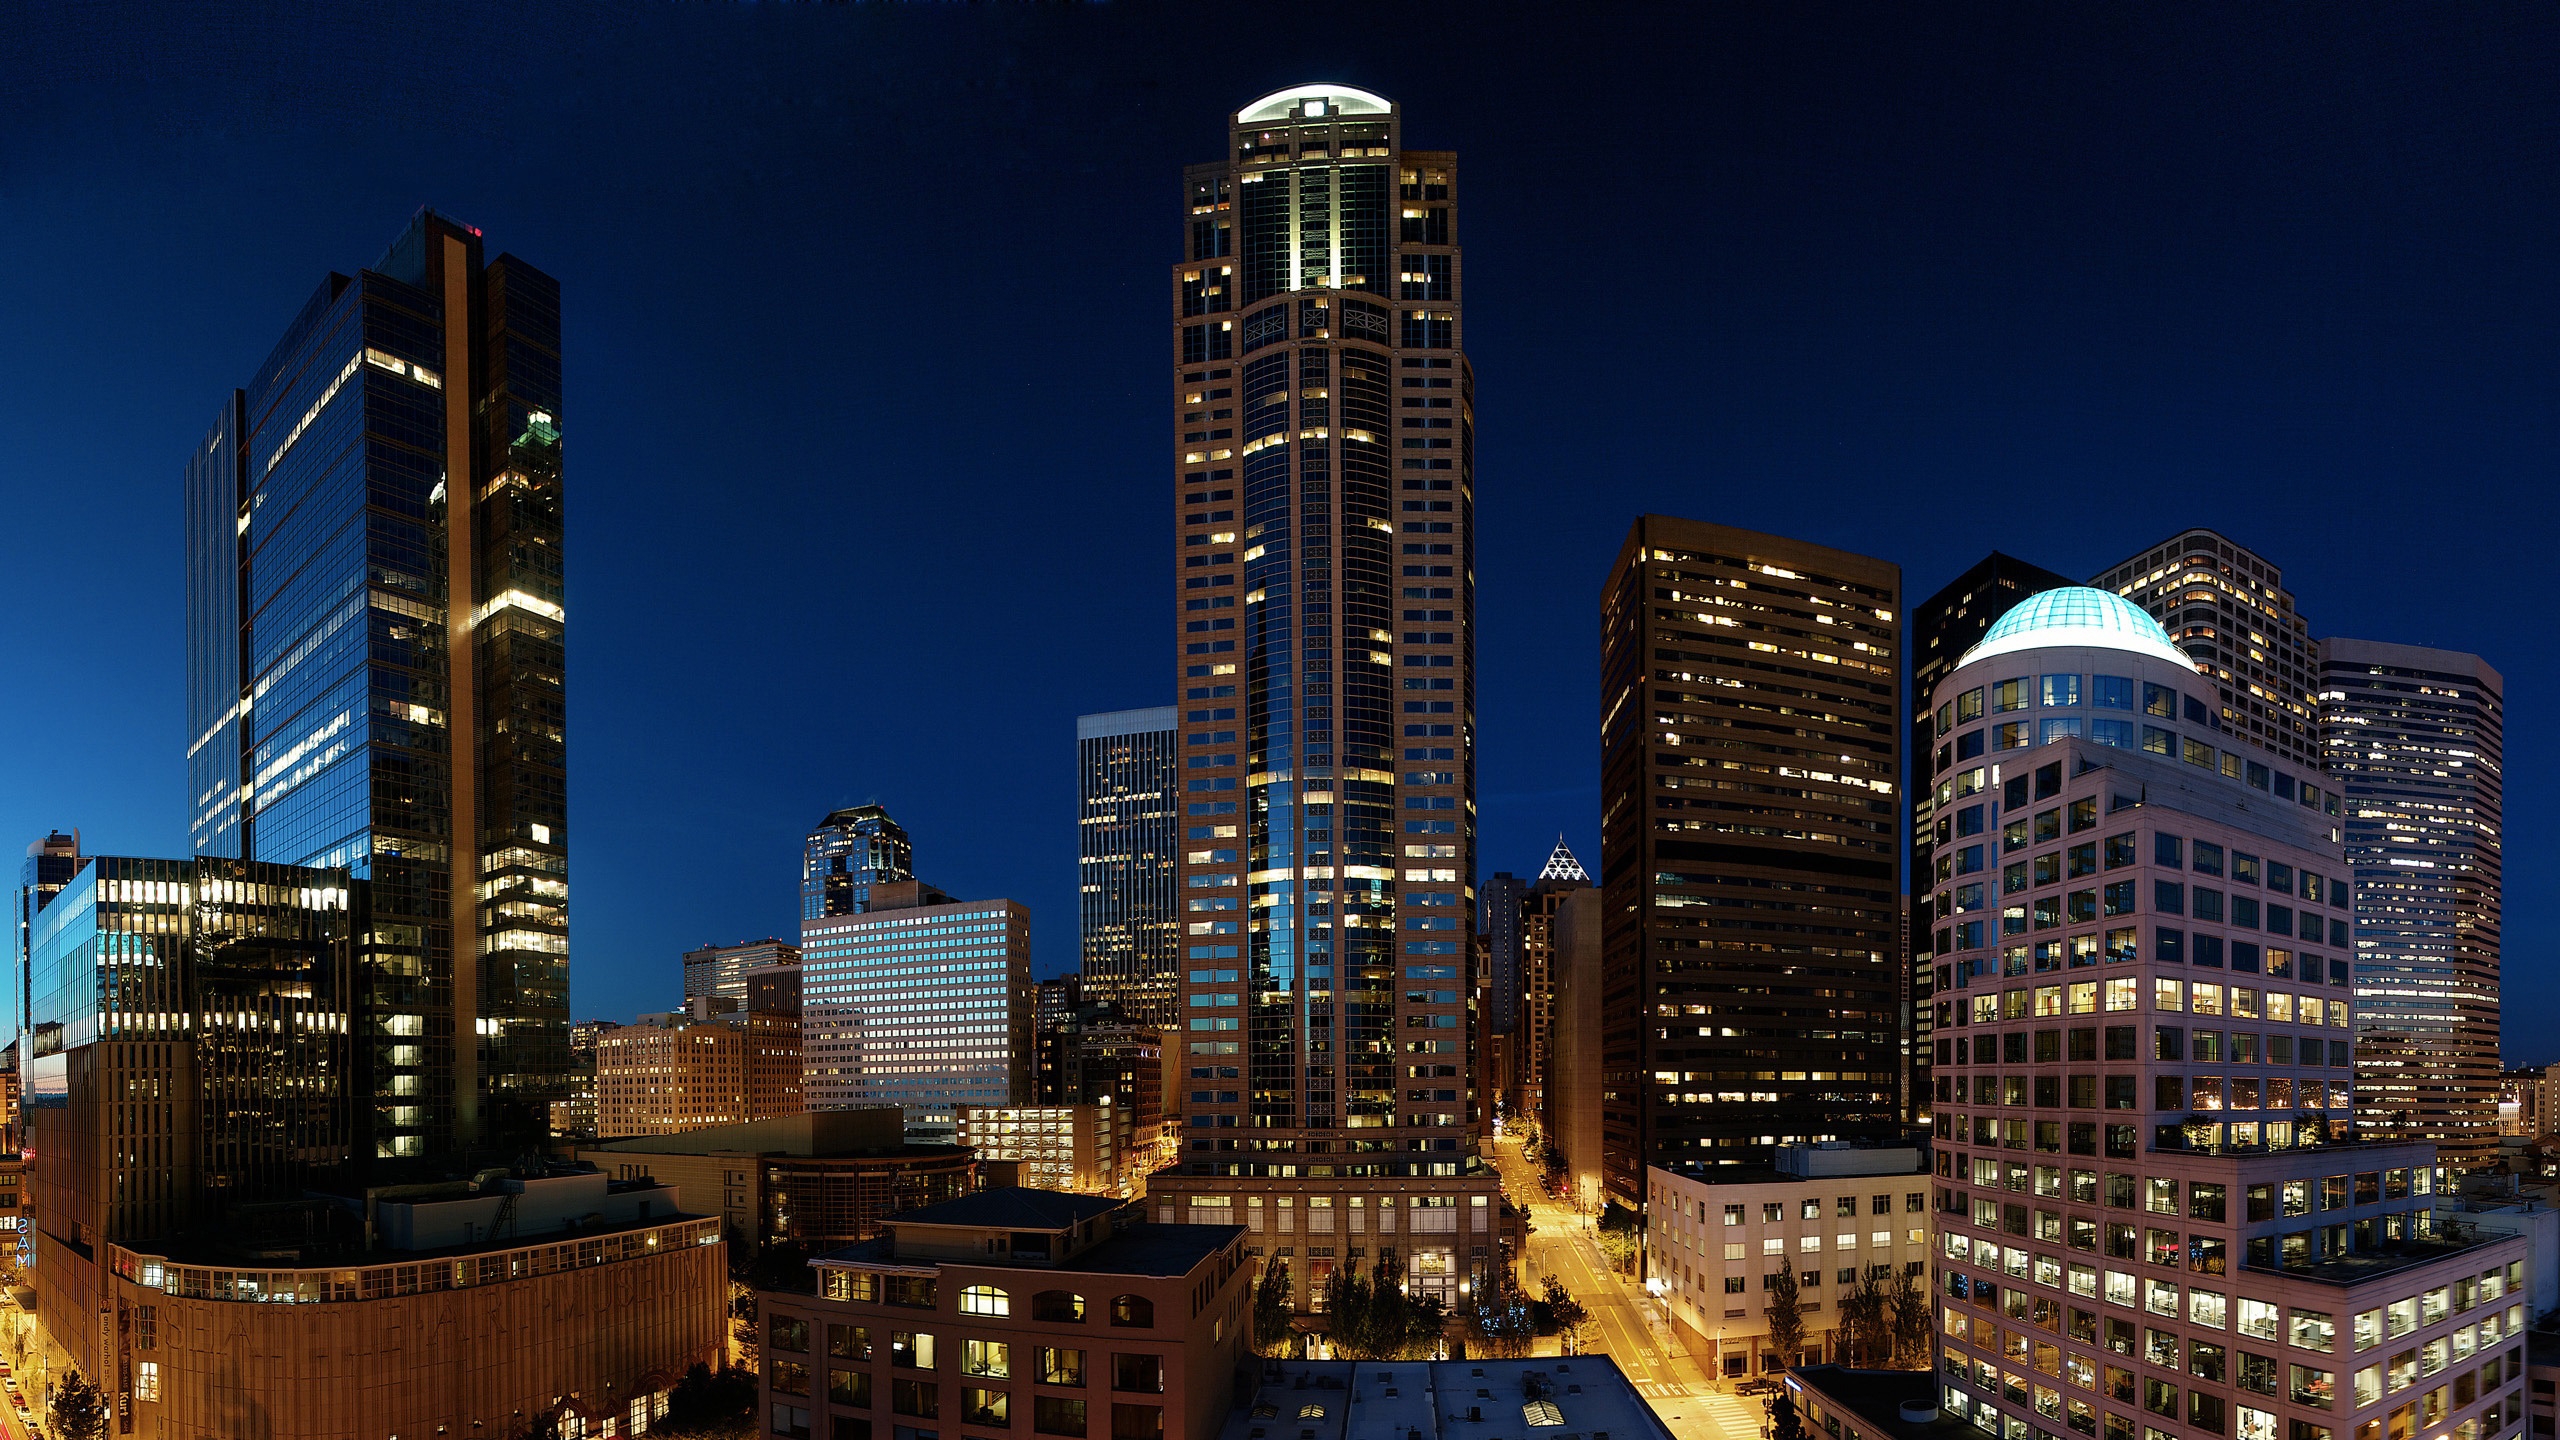 Seattle Night Lights for 2560x1440 HDTV resolution